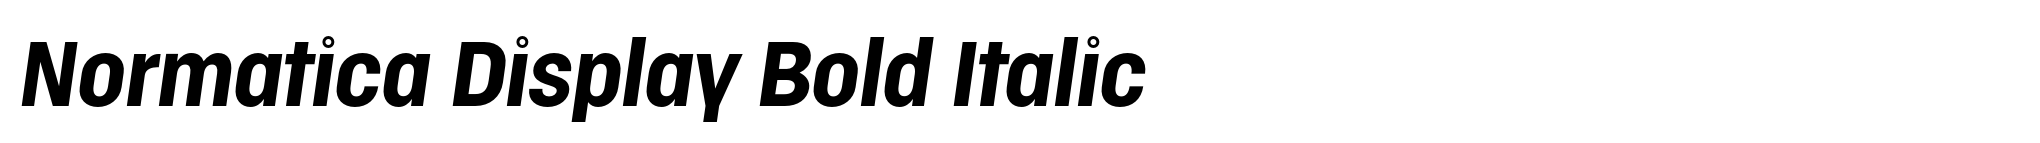 Normatica Display Bold Italic image